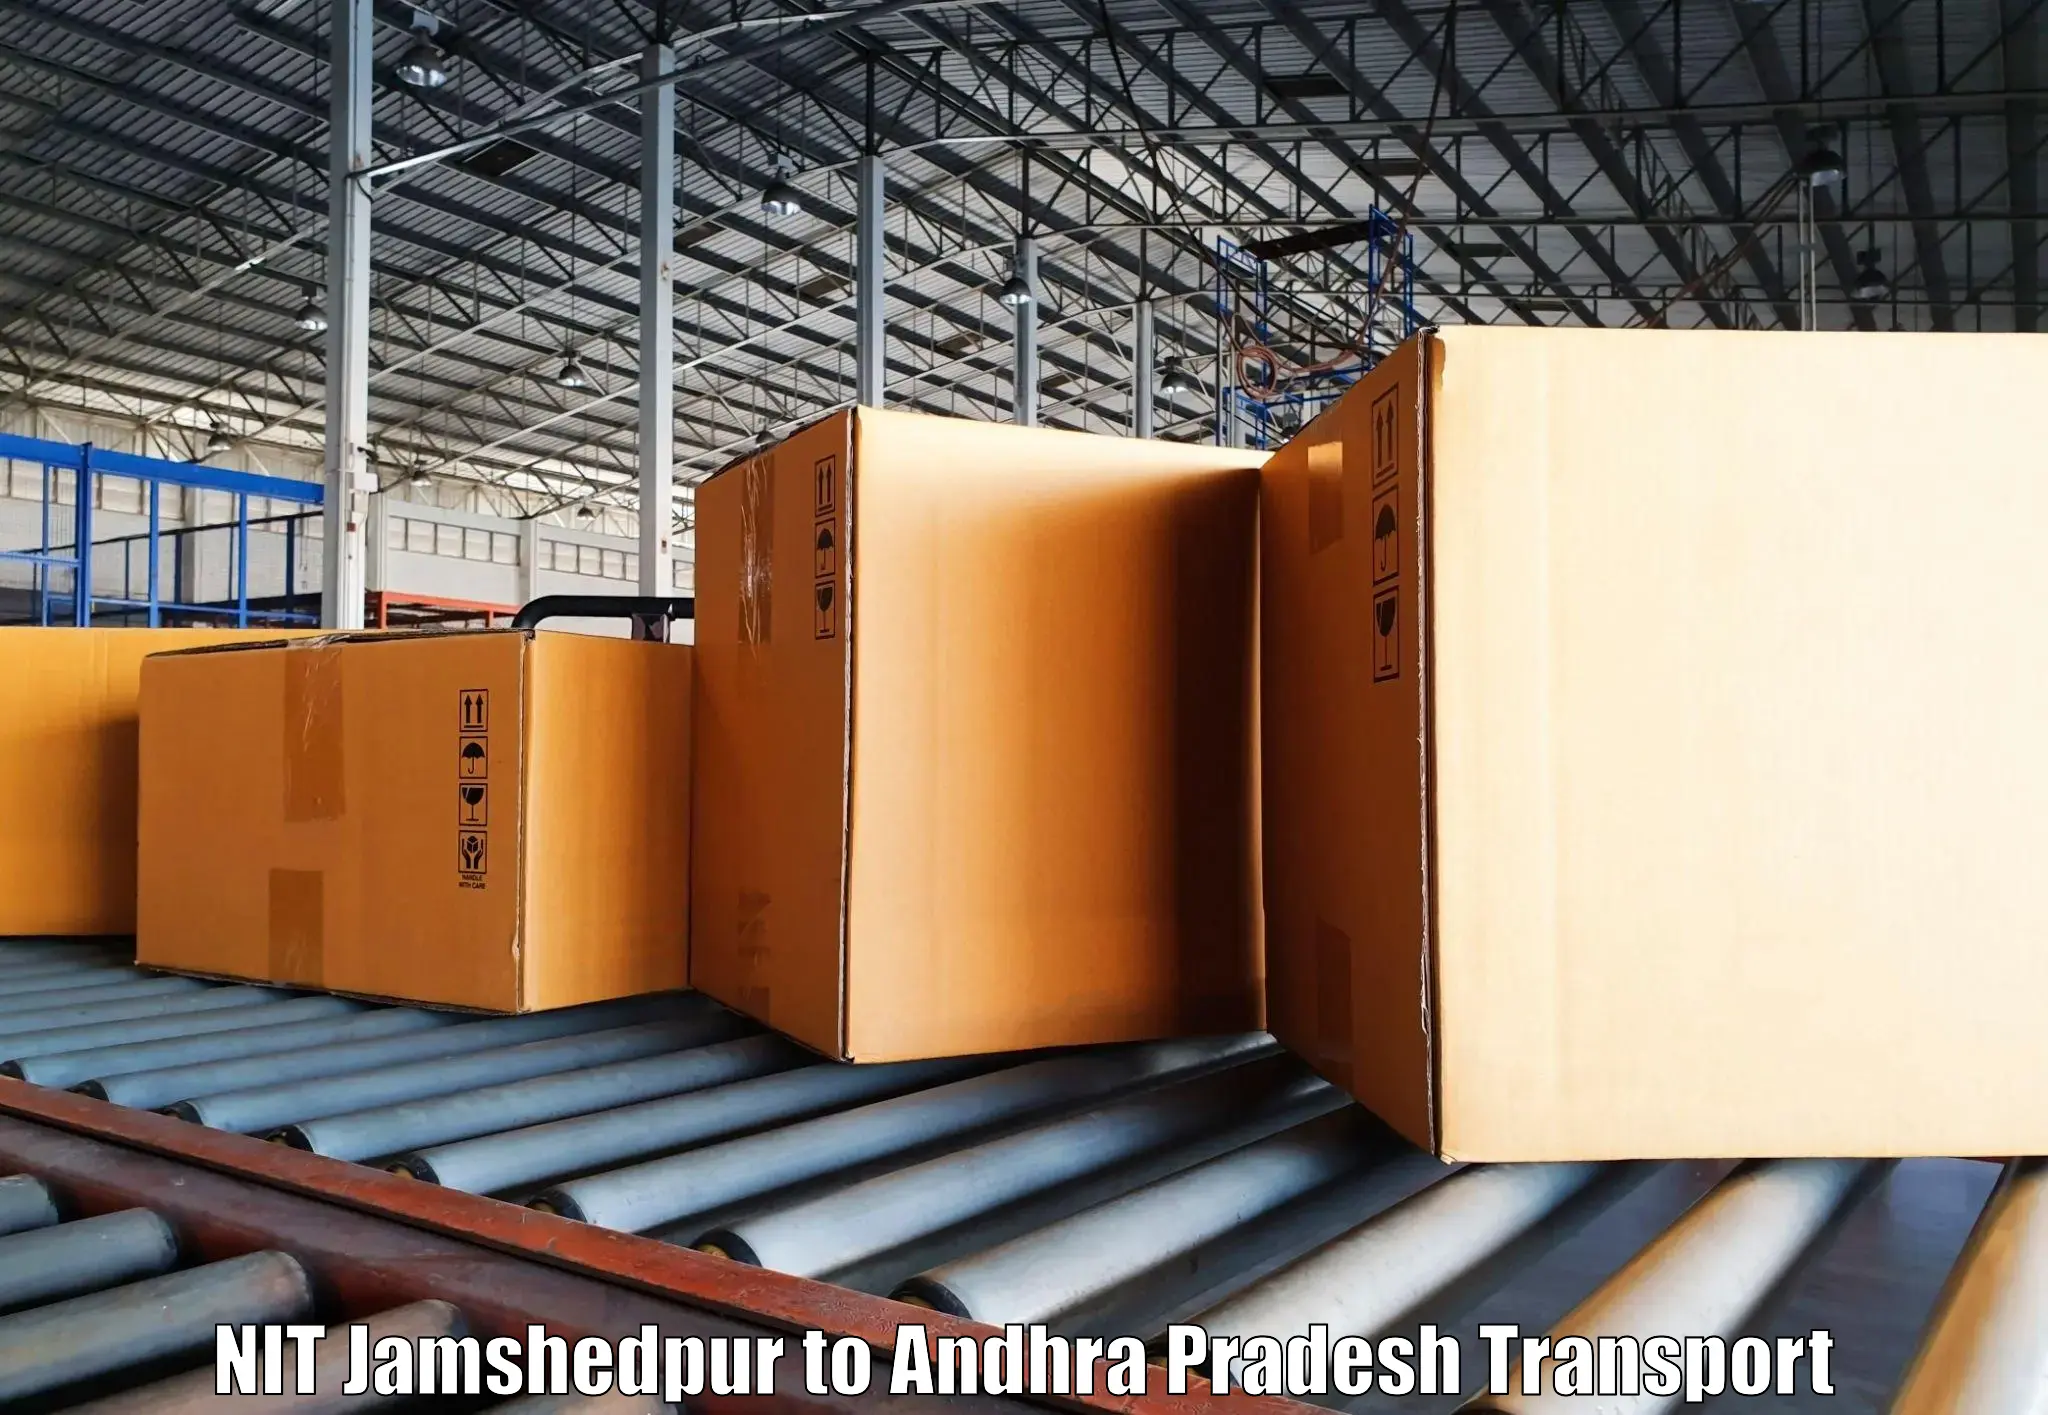 Cycle transportation service NIT Jamshedpur to Madakasira